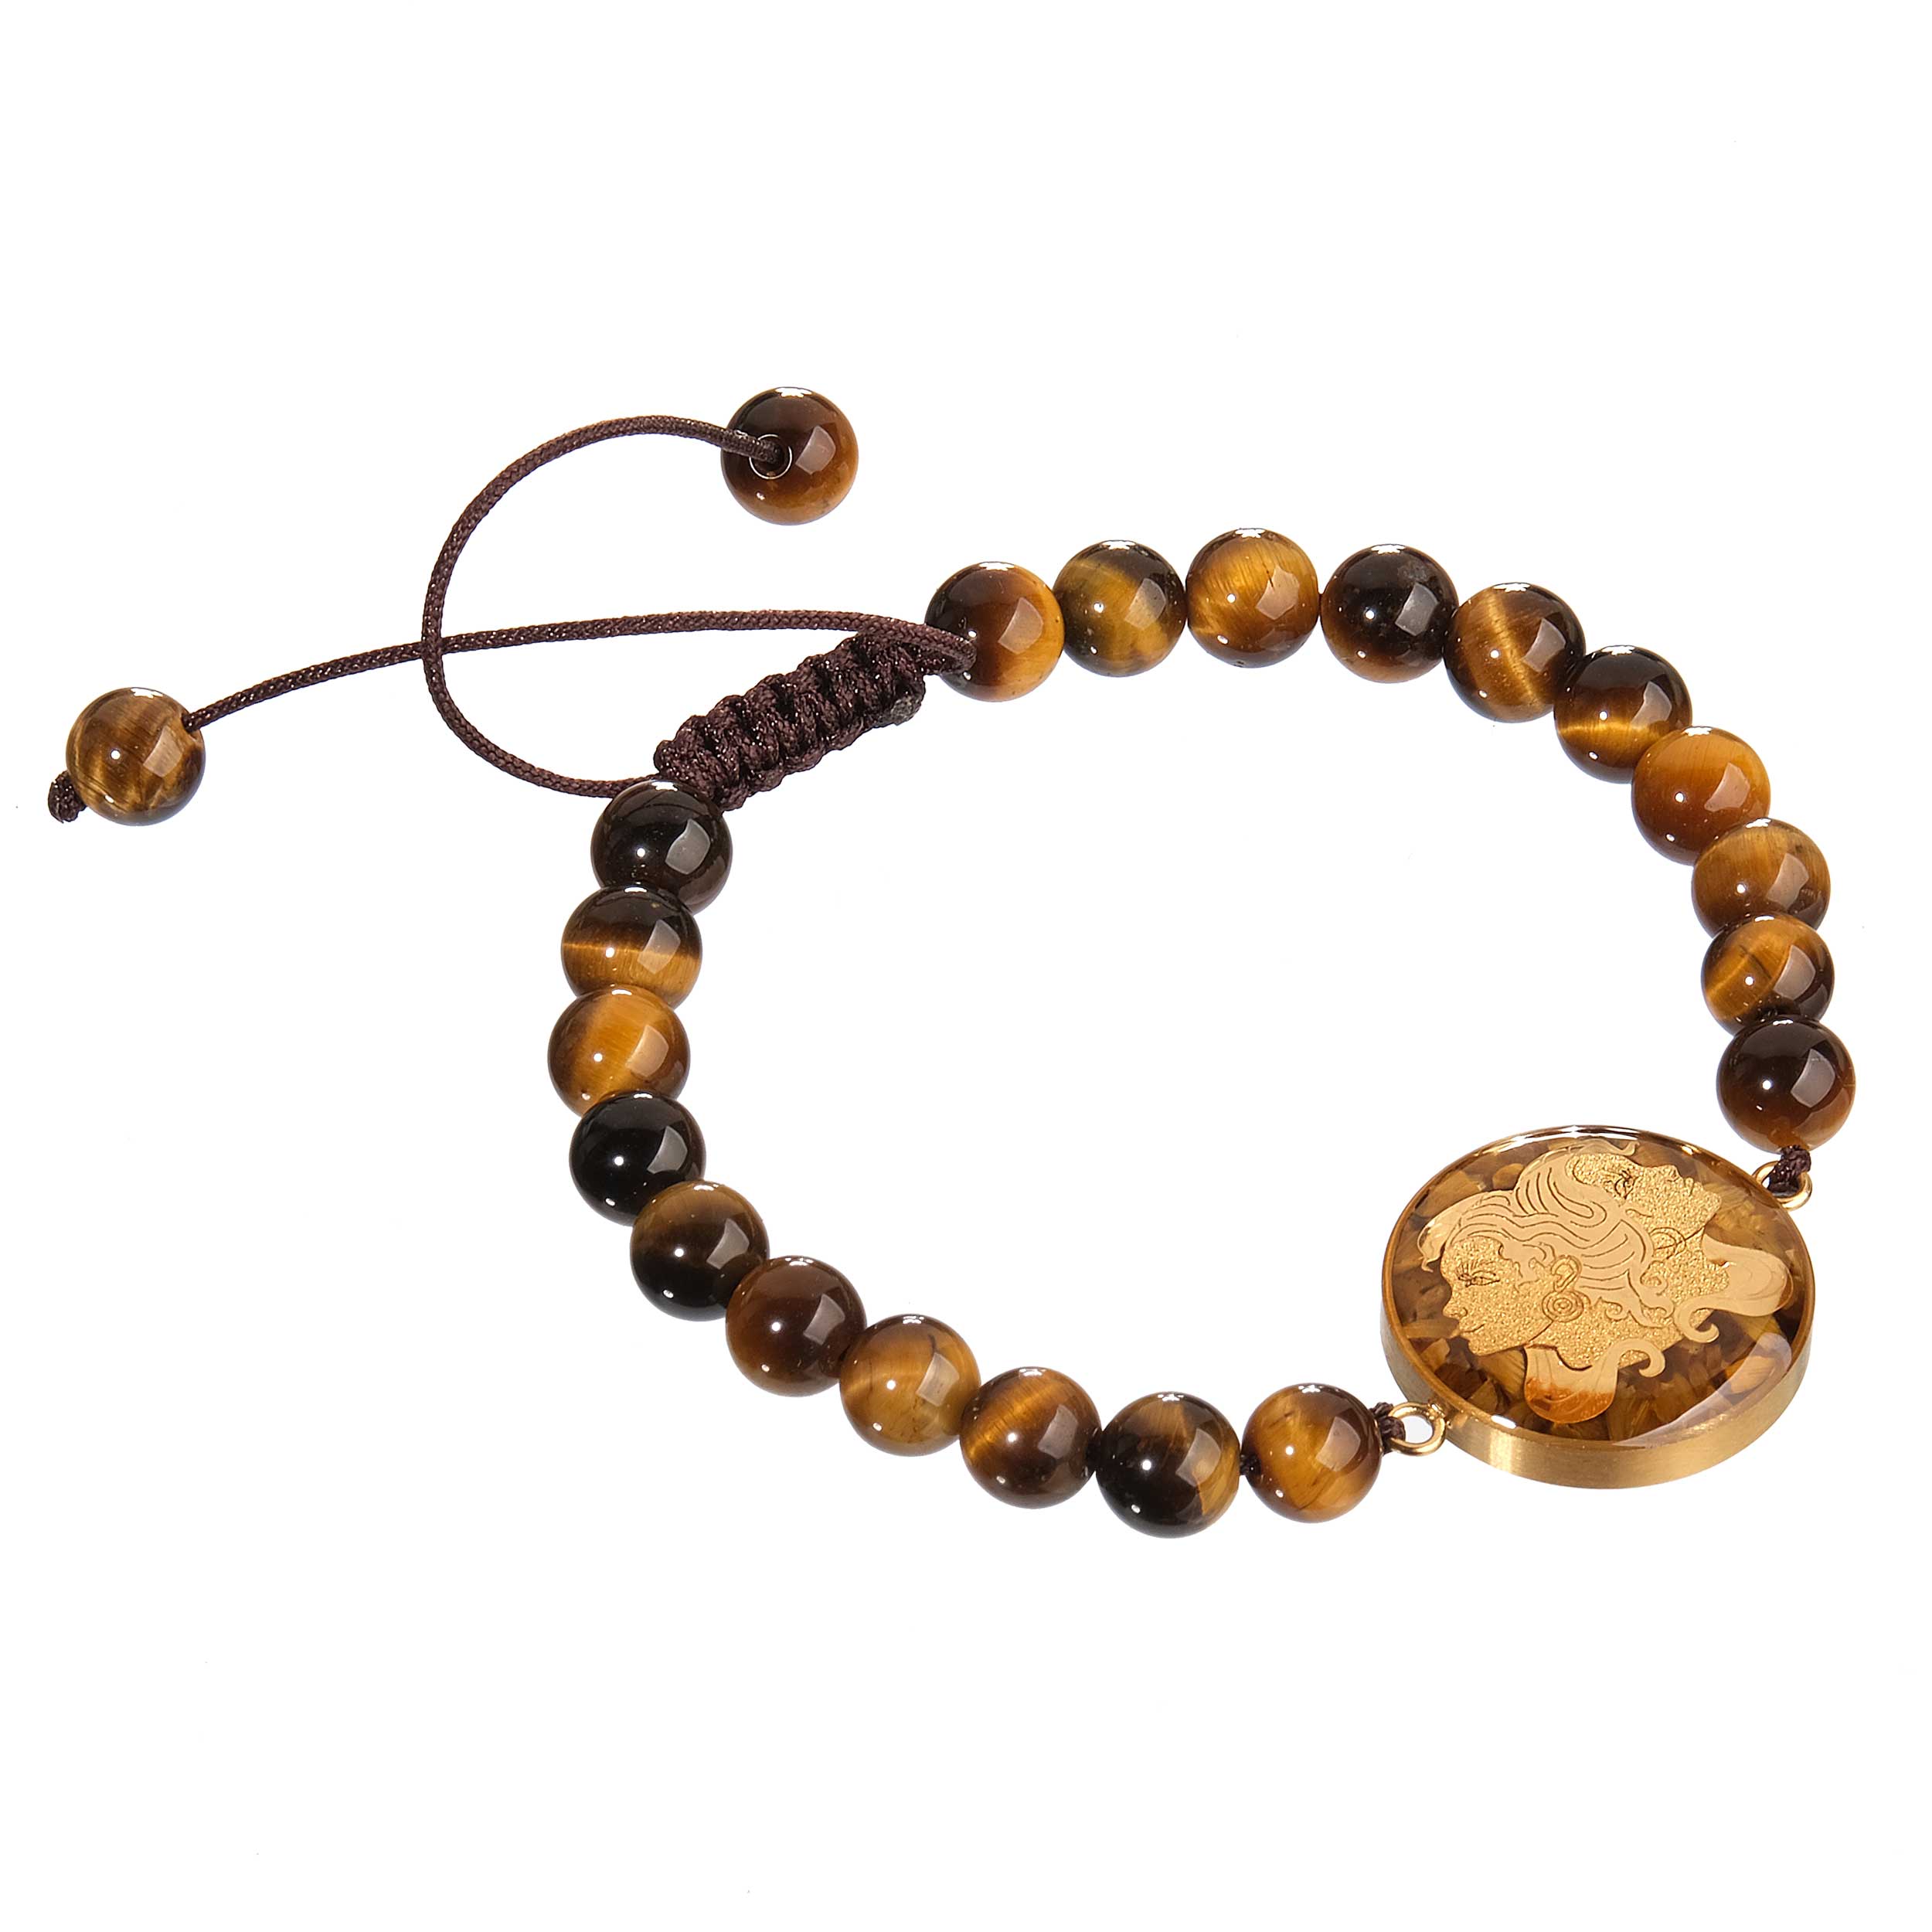 Tiger stone bracelet and 24 carat gold leaf with the symbol of June